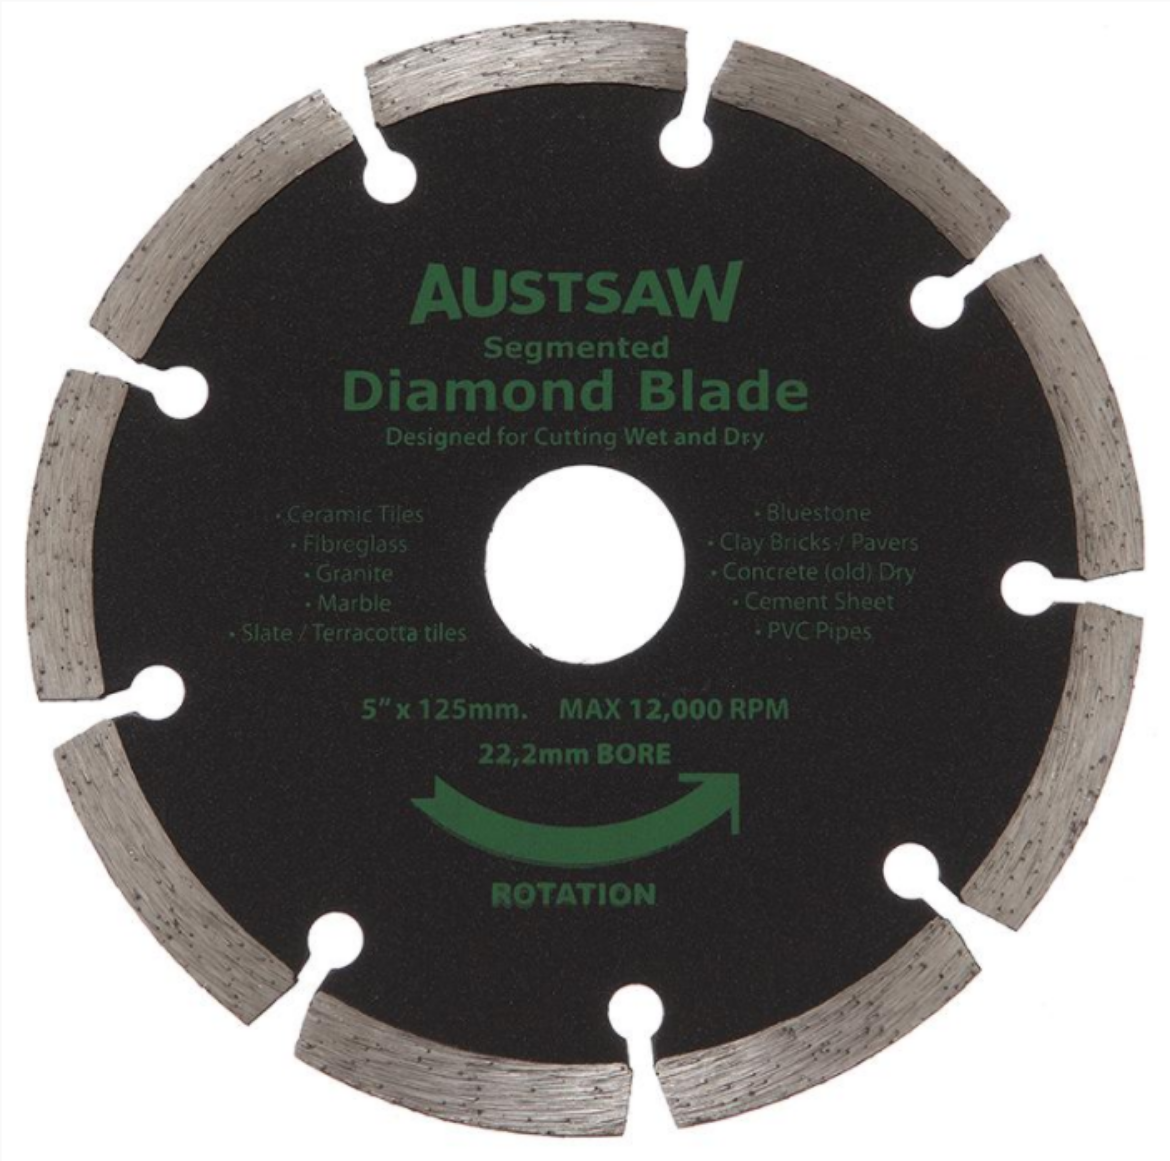 Picture of Austsaw Super Turbo Diamond Cutting Blade Segmented 5" 22.2 mm Bore Maximum Speed 12,000 RPM